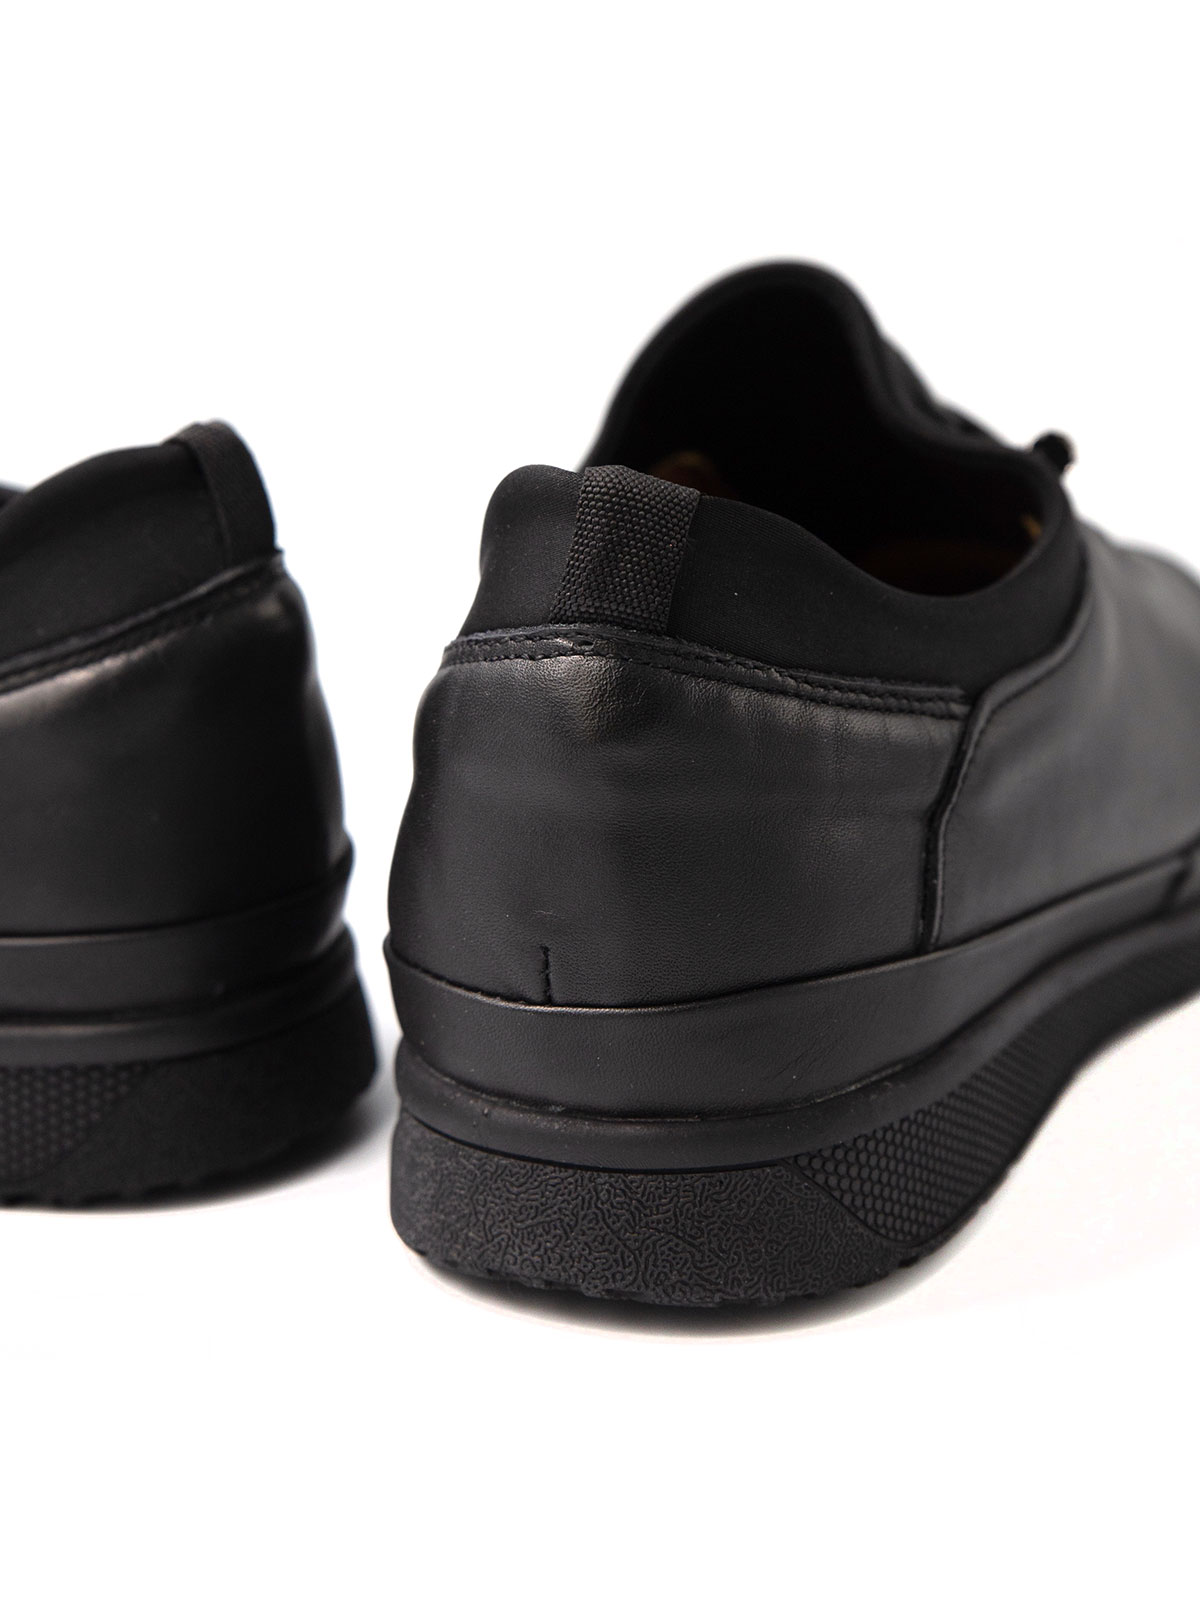 Pantofi din piele neagra cu sireturi ela - 81095 - € 41.62 img4